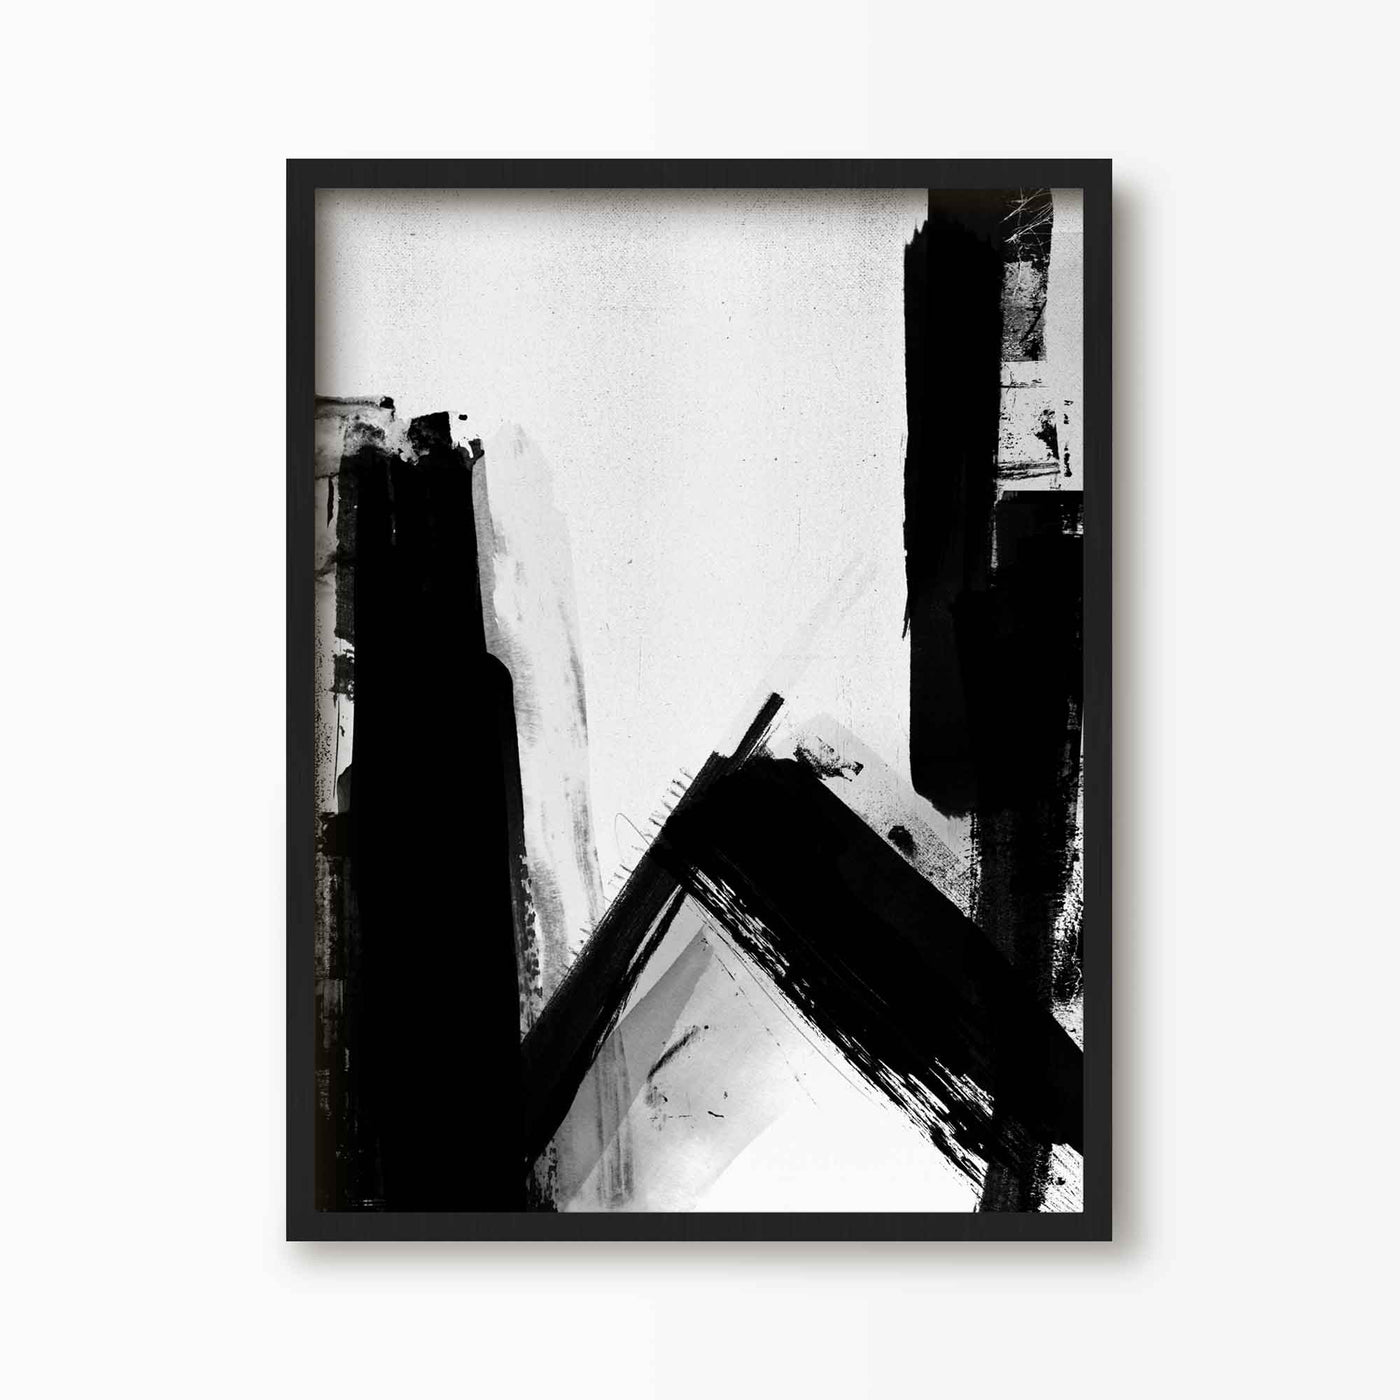 Green Lili W / 30x40cm (12x16") / Black Frame Abstract Letter Art Prints (N-Z)